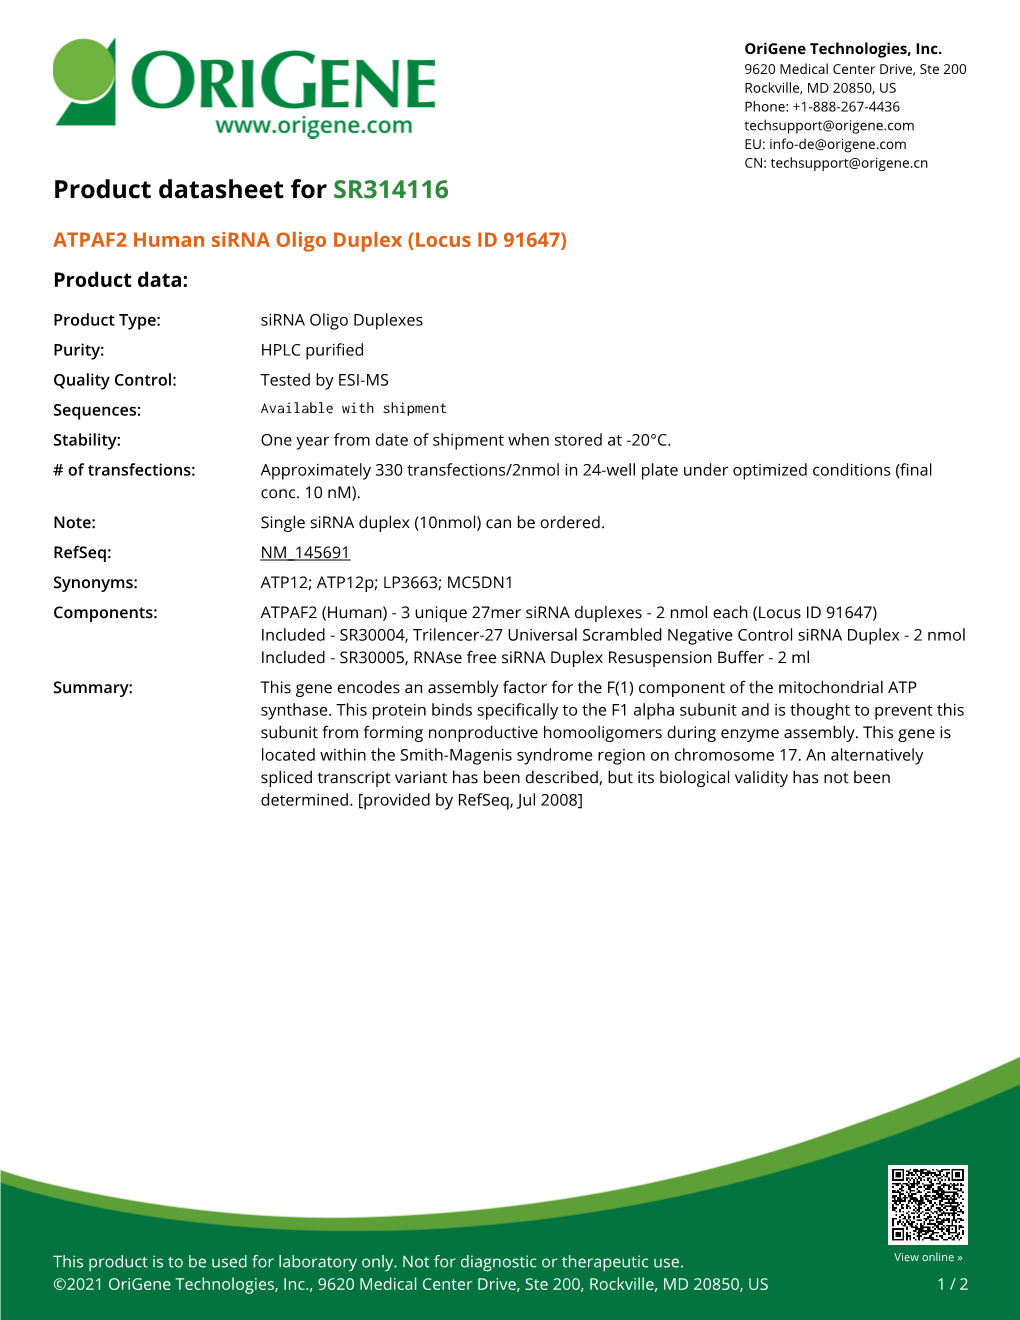 ATPAF2 Human Sirna Oligo Duplex (Locus ID 91647) Product Data